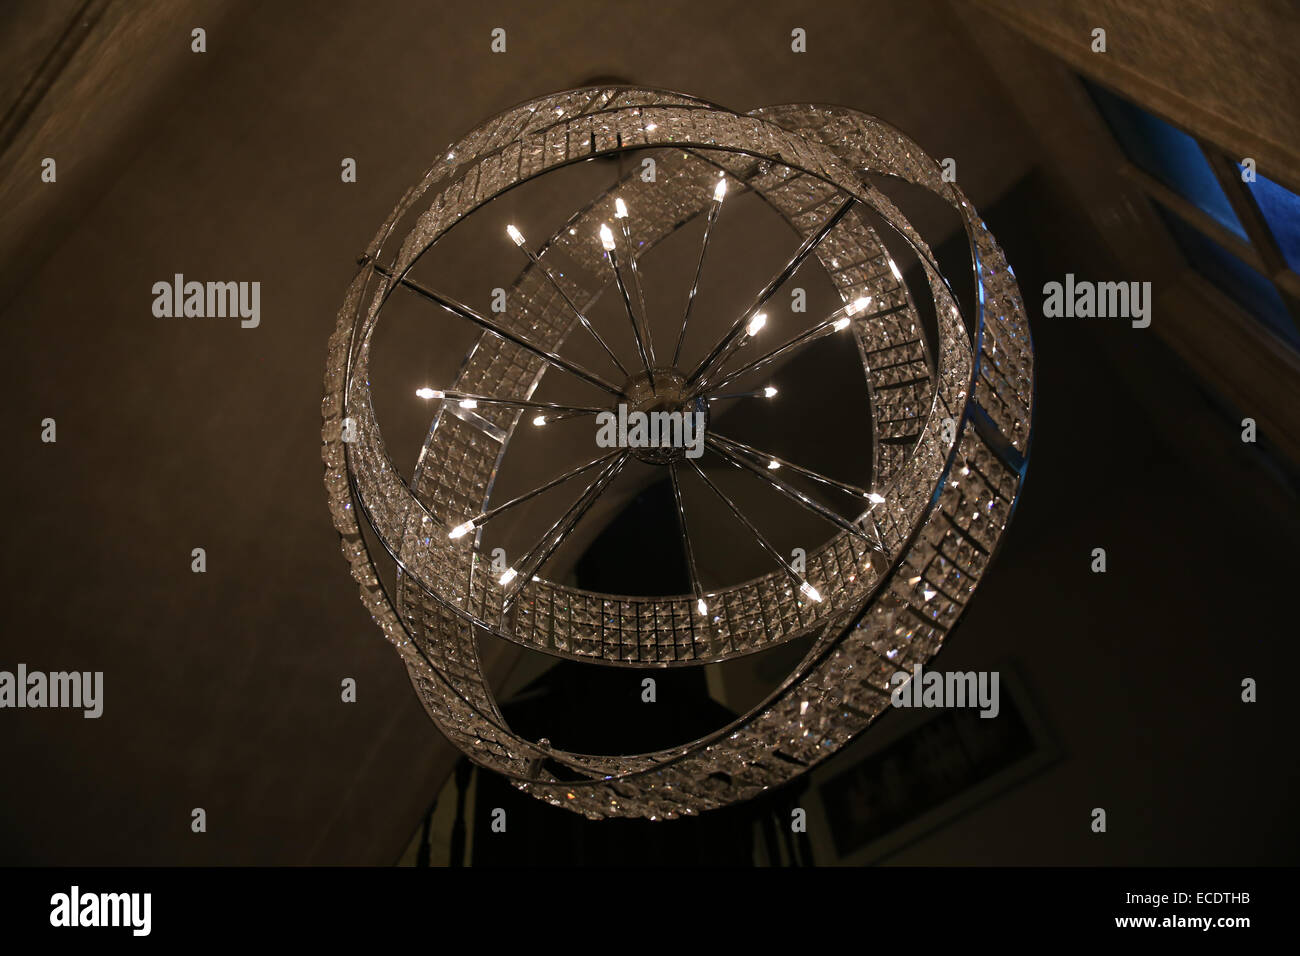 chandelier inside Amsterdam diamond museum Stock Photo